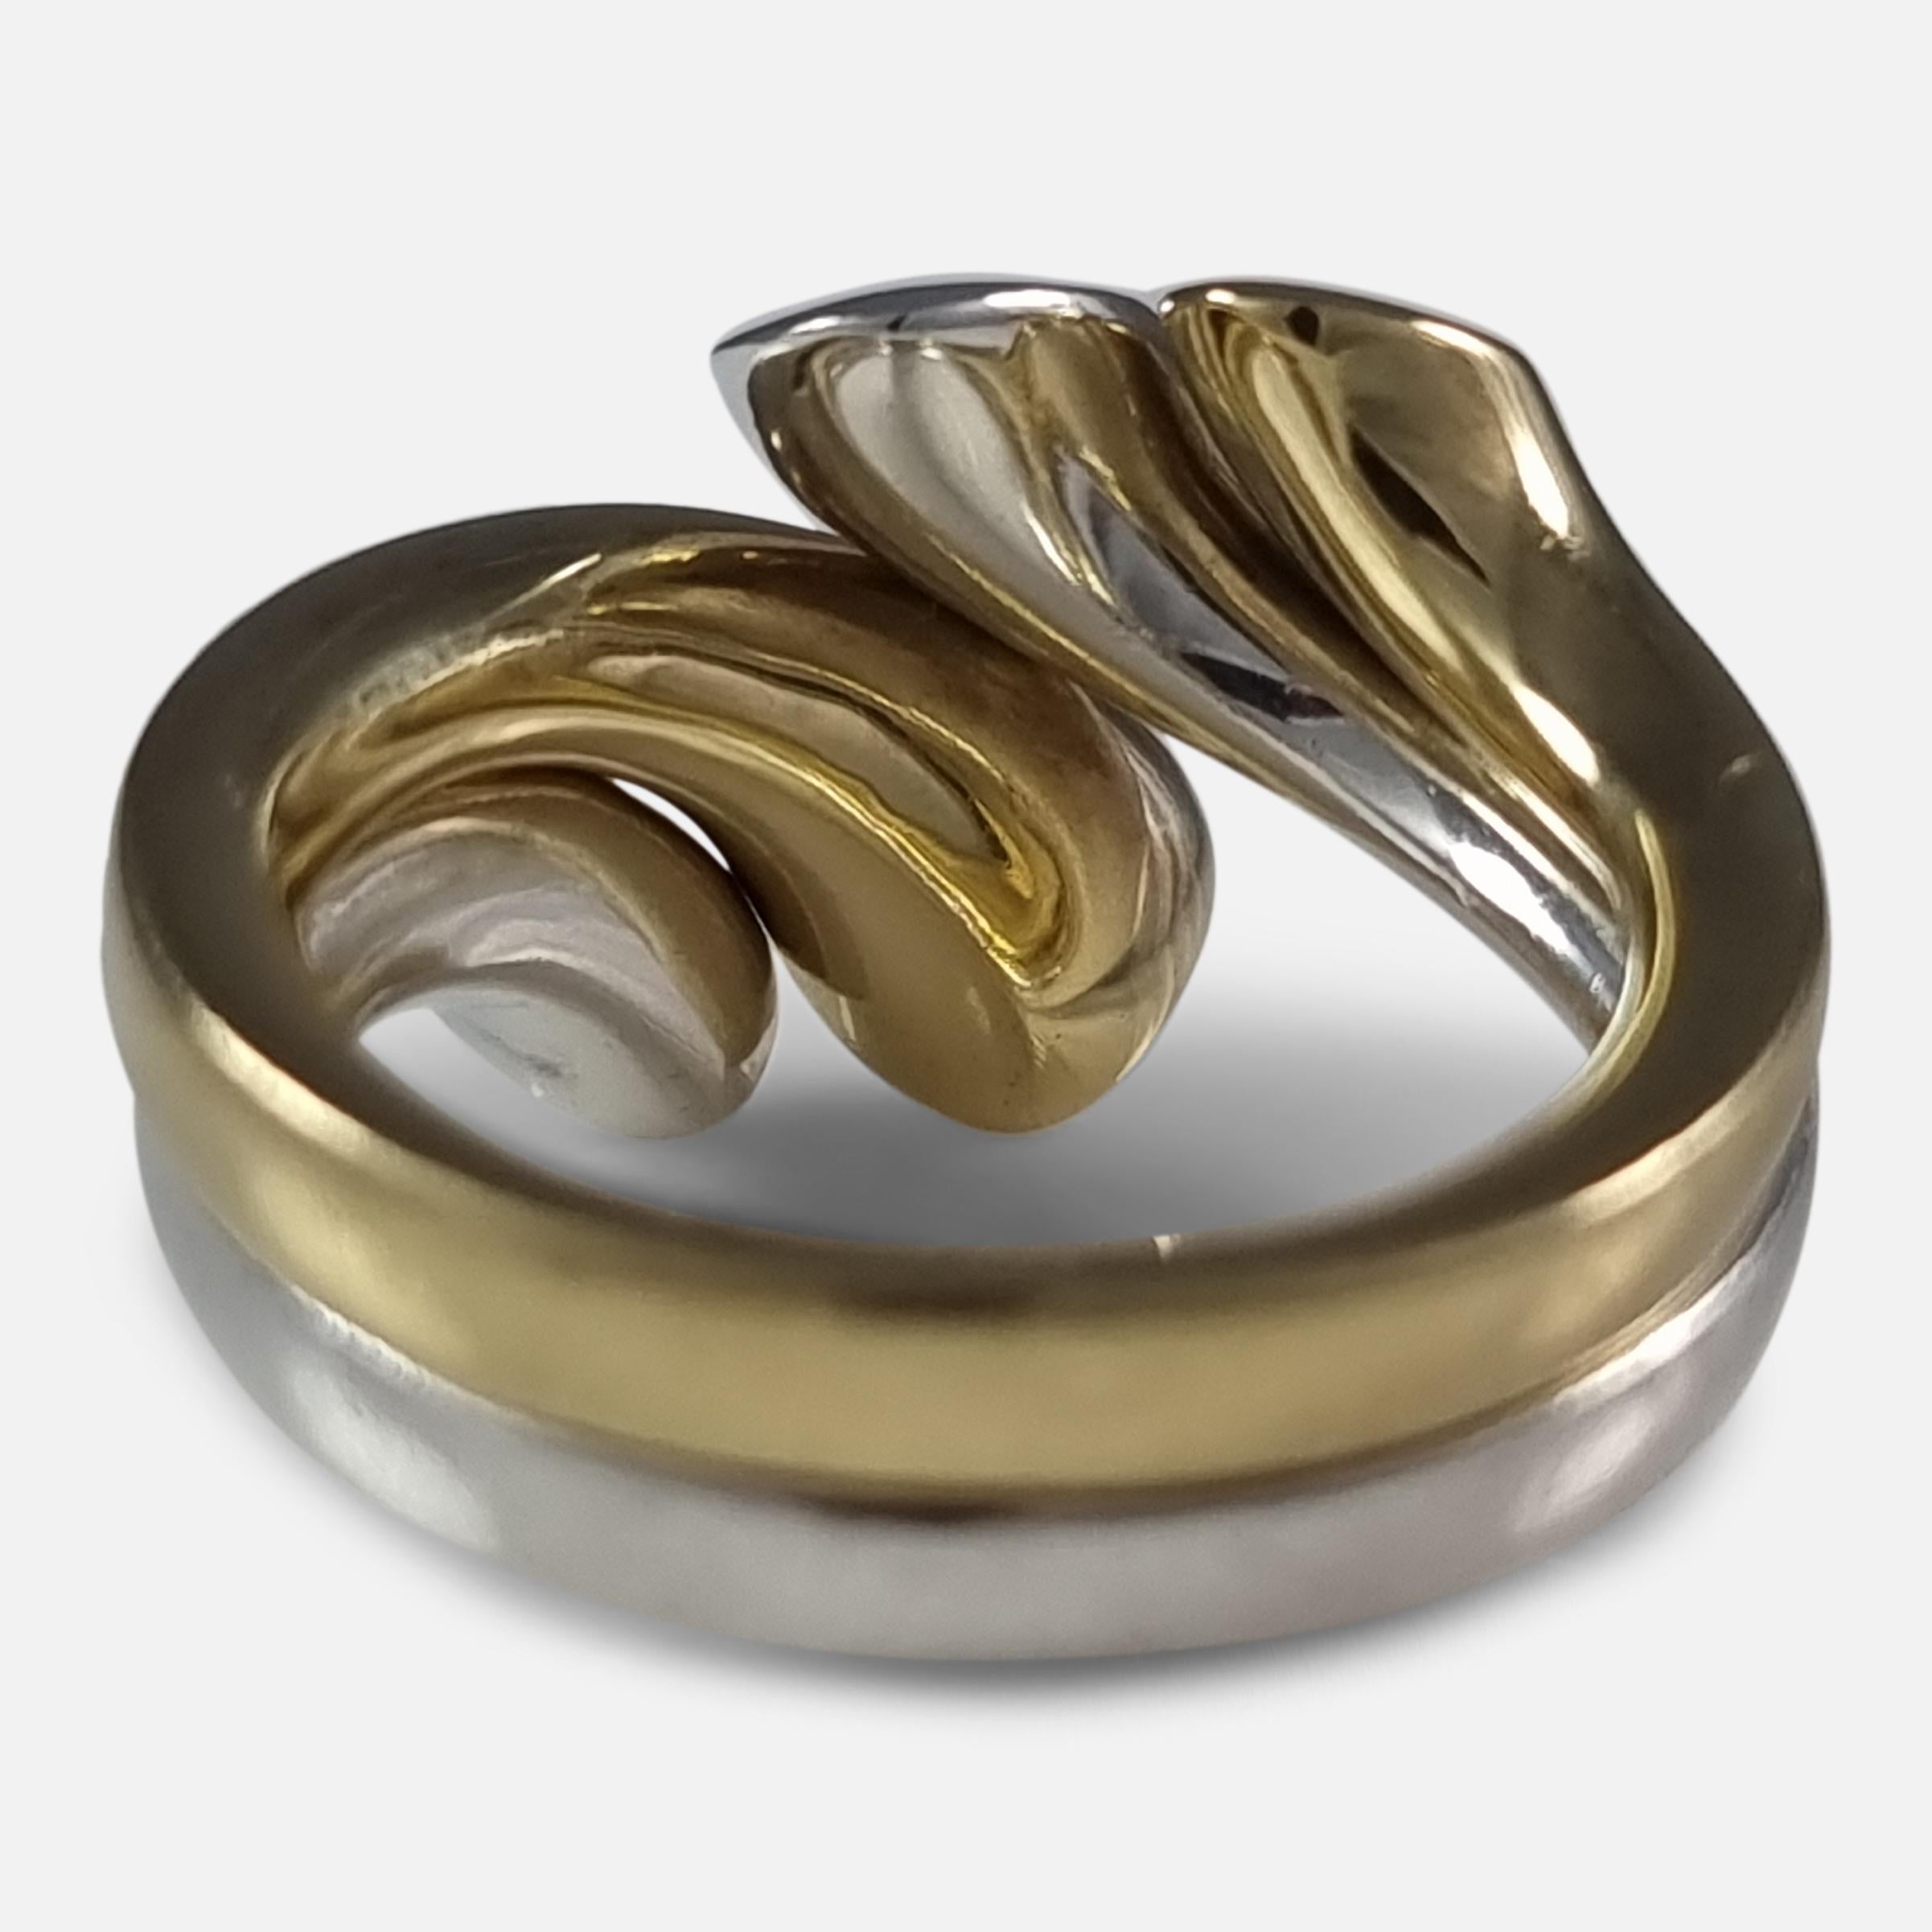 Georg Jensen 18ct Gold and Silver 'Devoted Heart' Ring, Regitze Overgaard 8